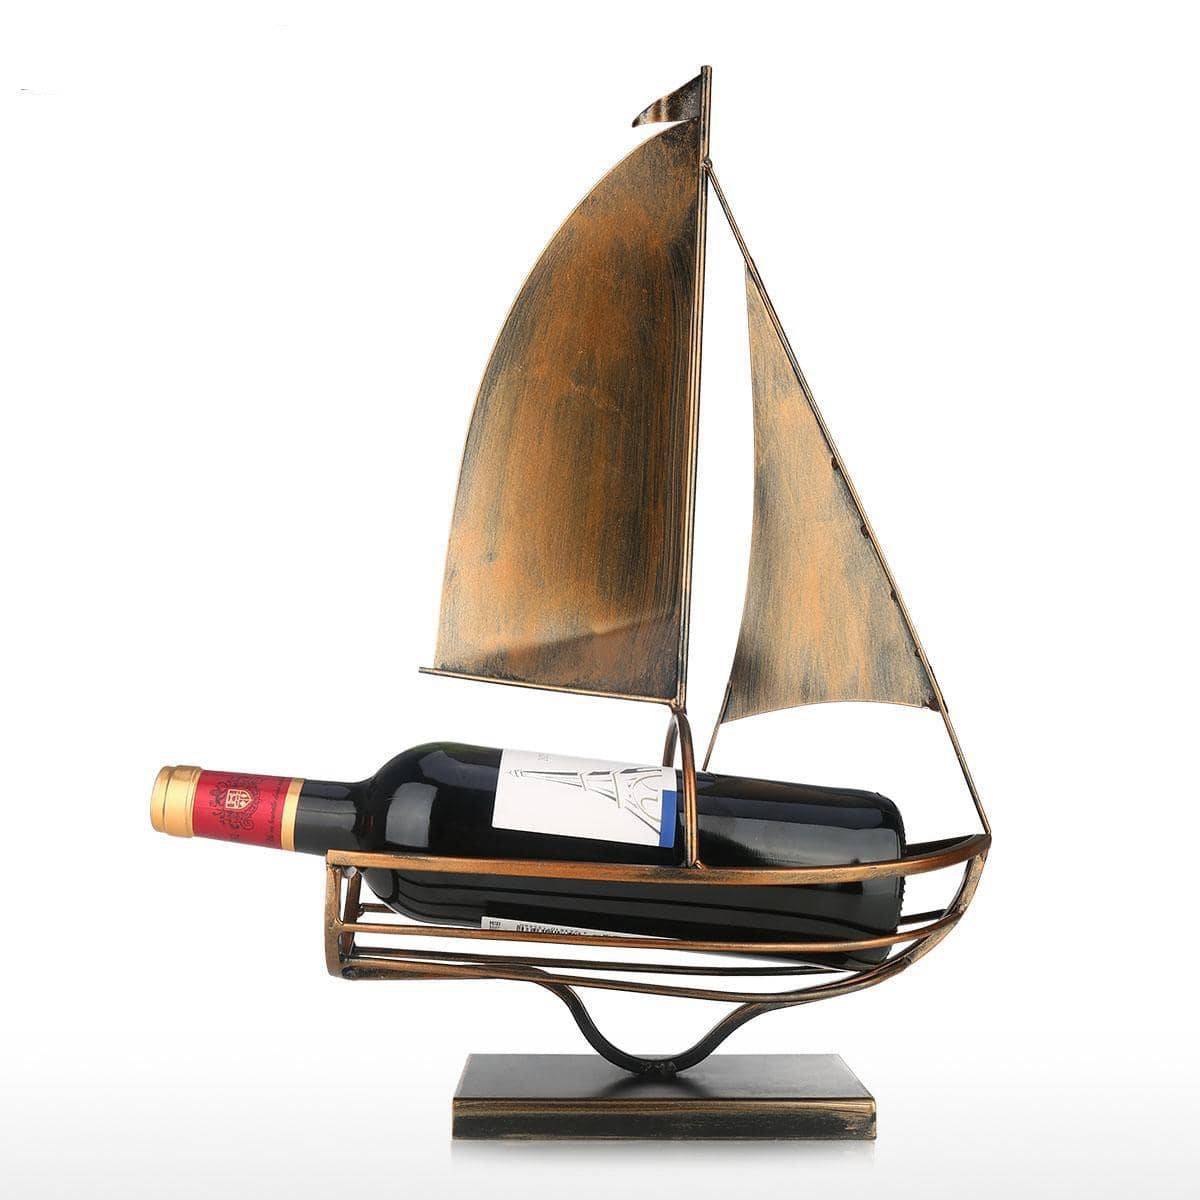 Sailing Boat Wine Holder - Stylish & Functional Home Bar Accessory